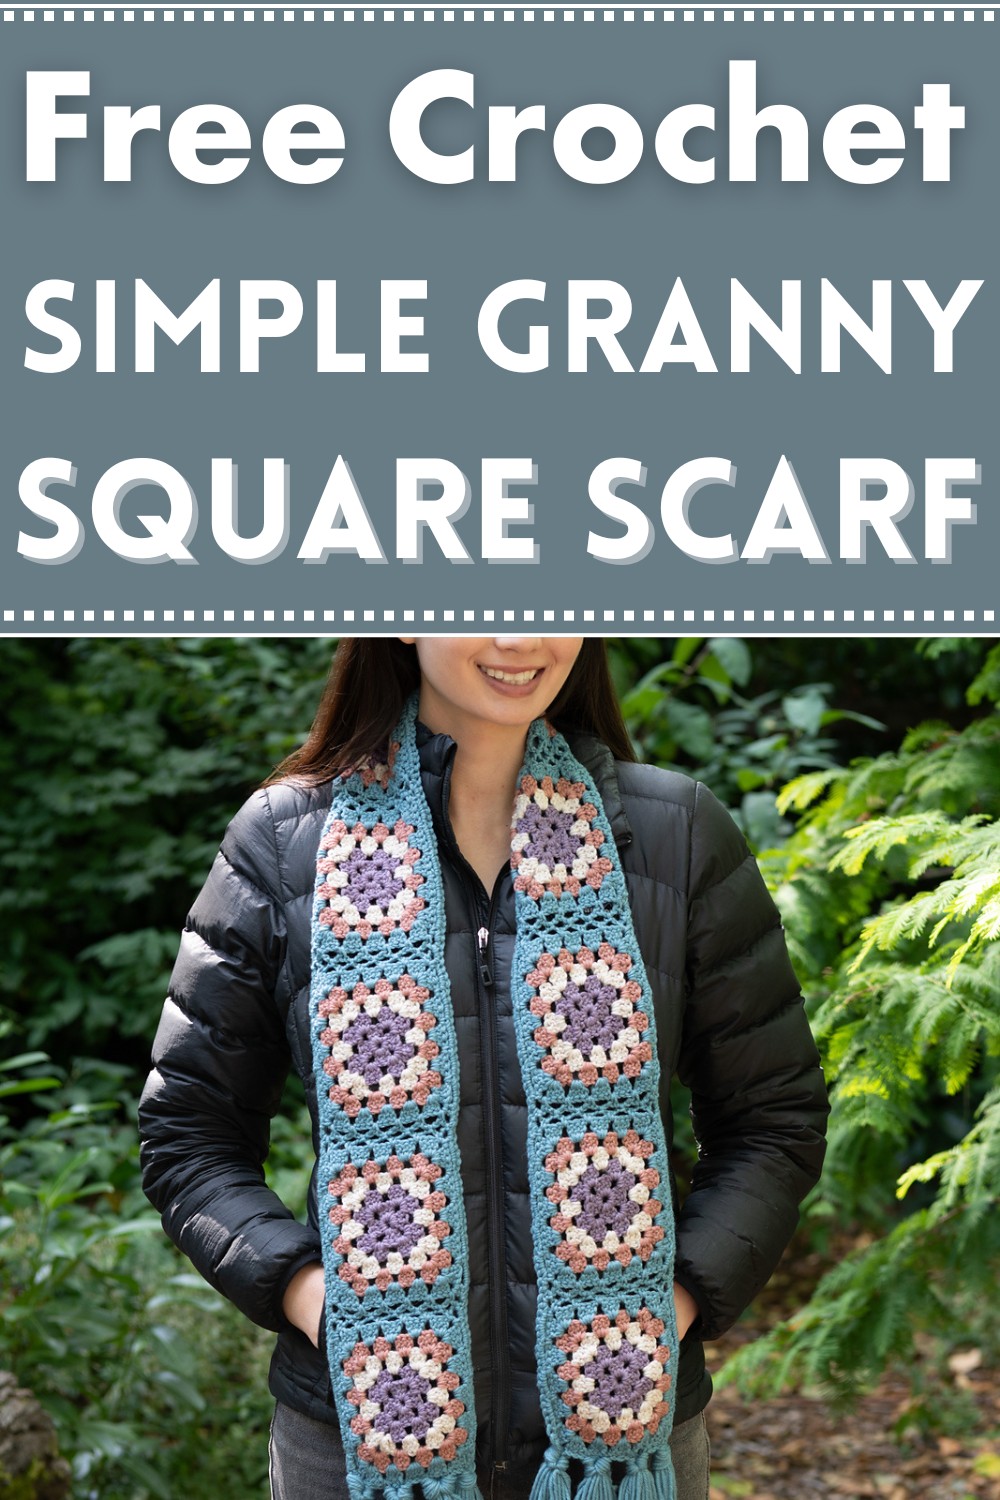 Simple Granny Square Scarf